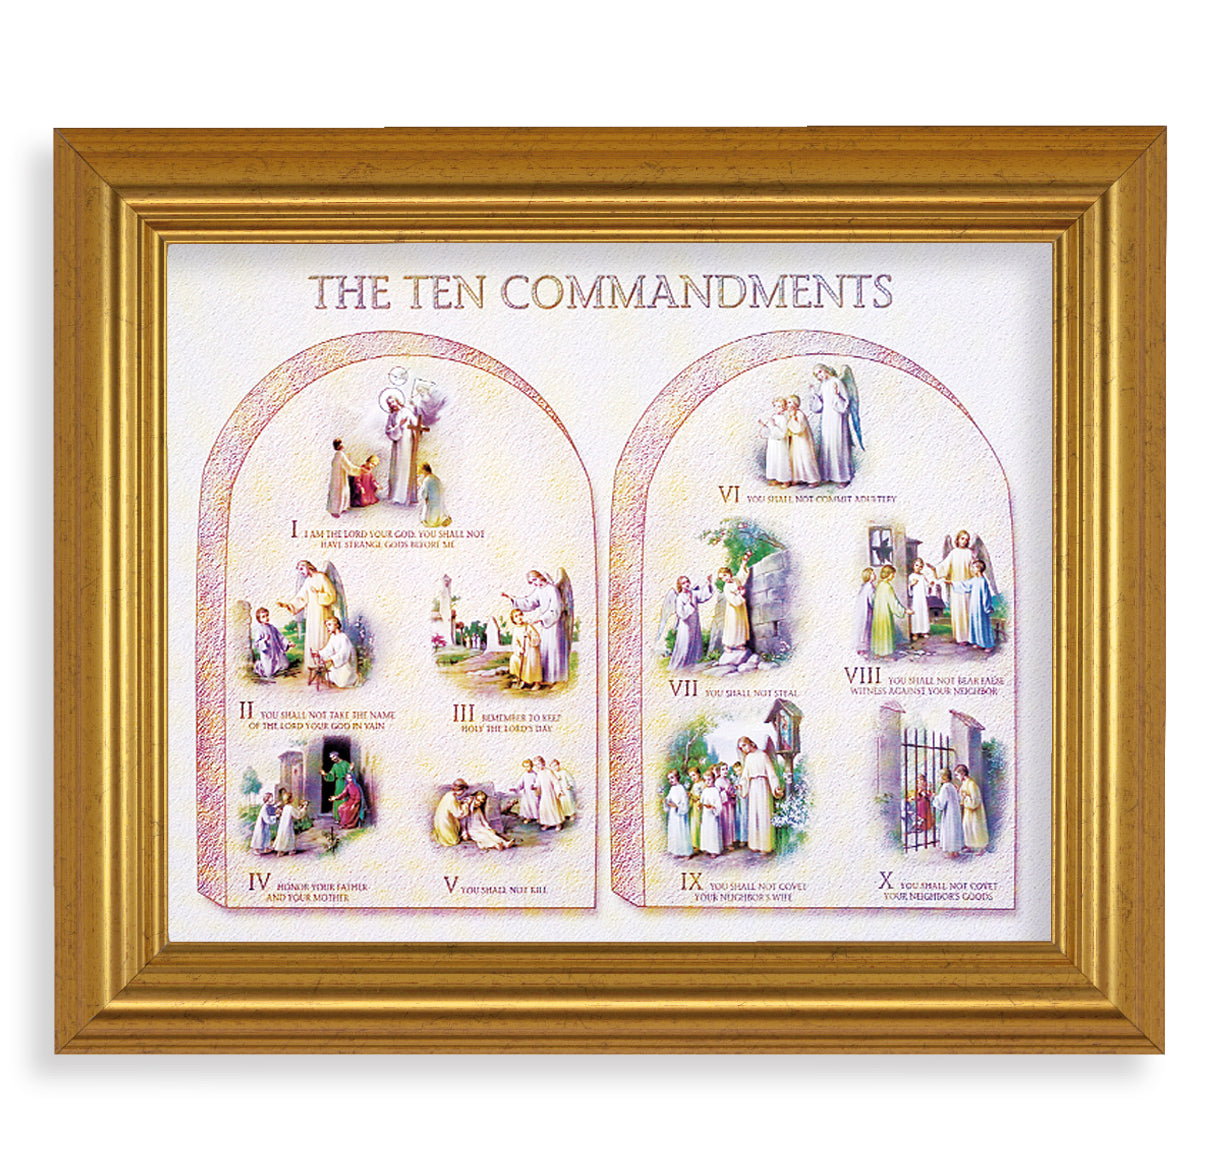 Ten Commandments Picture Framed Wall Art Decor, Large, Antique Gold-Leaf Classic Frame